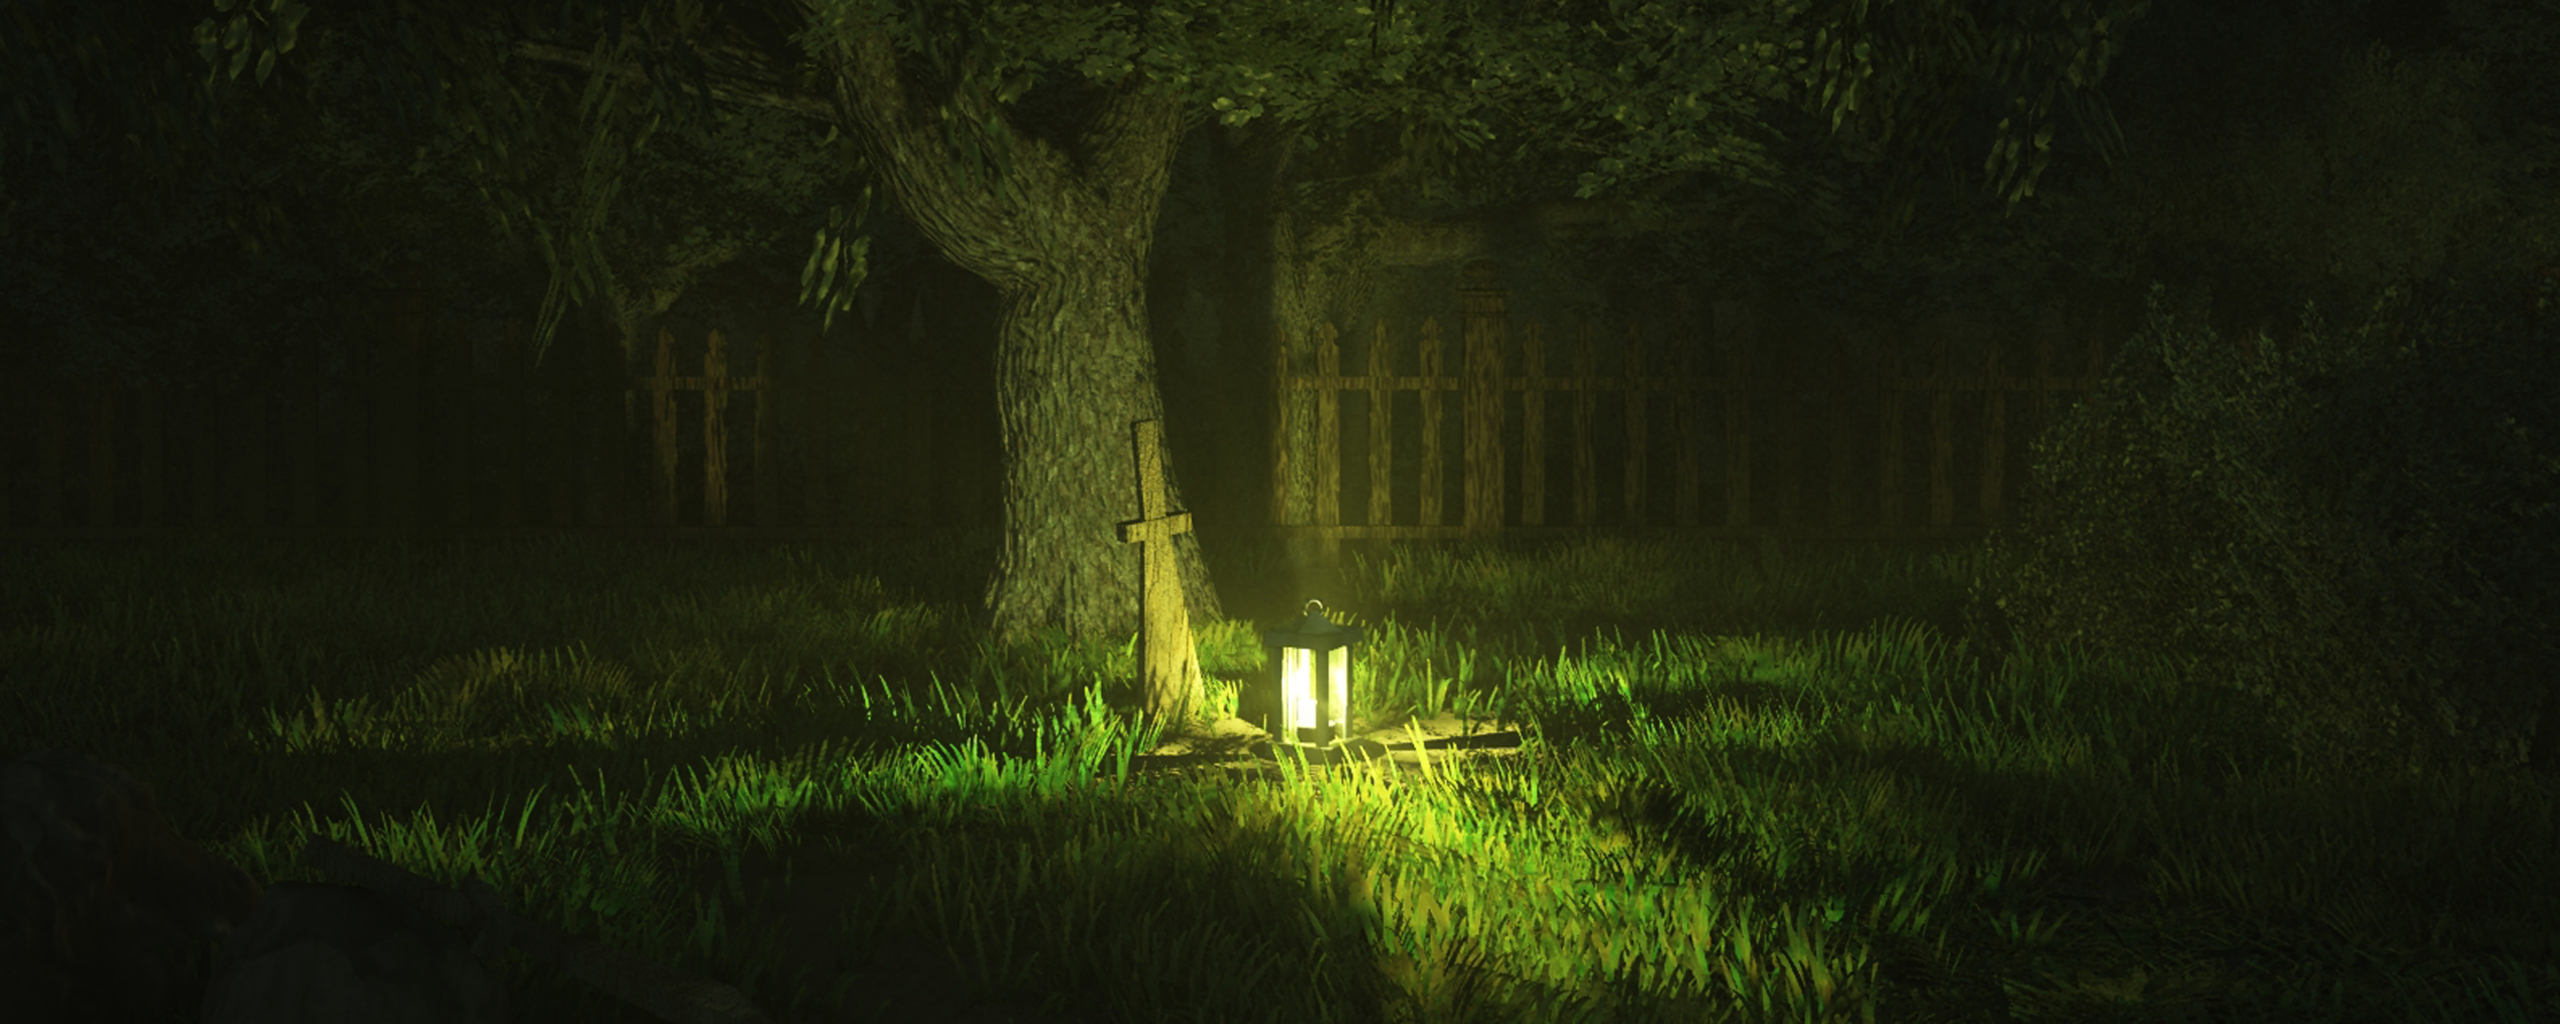 Spooky lantern illuminating a graveyard at night